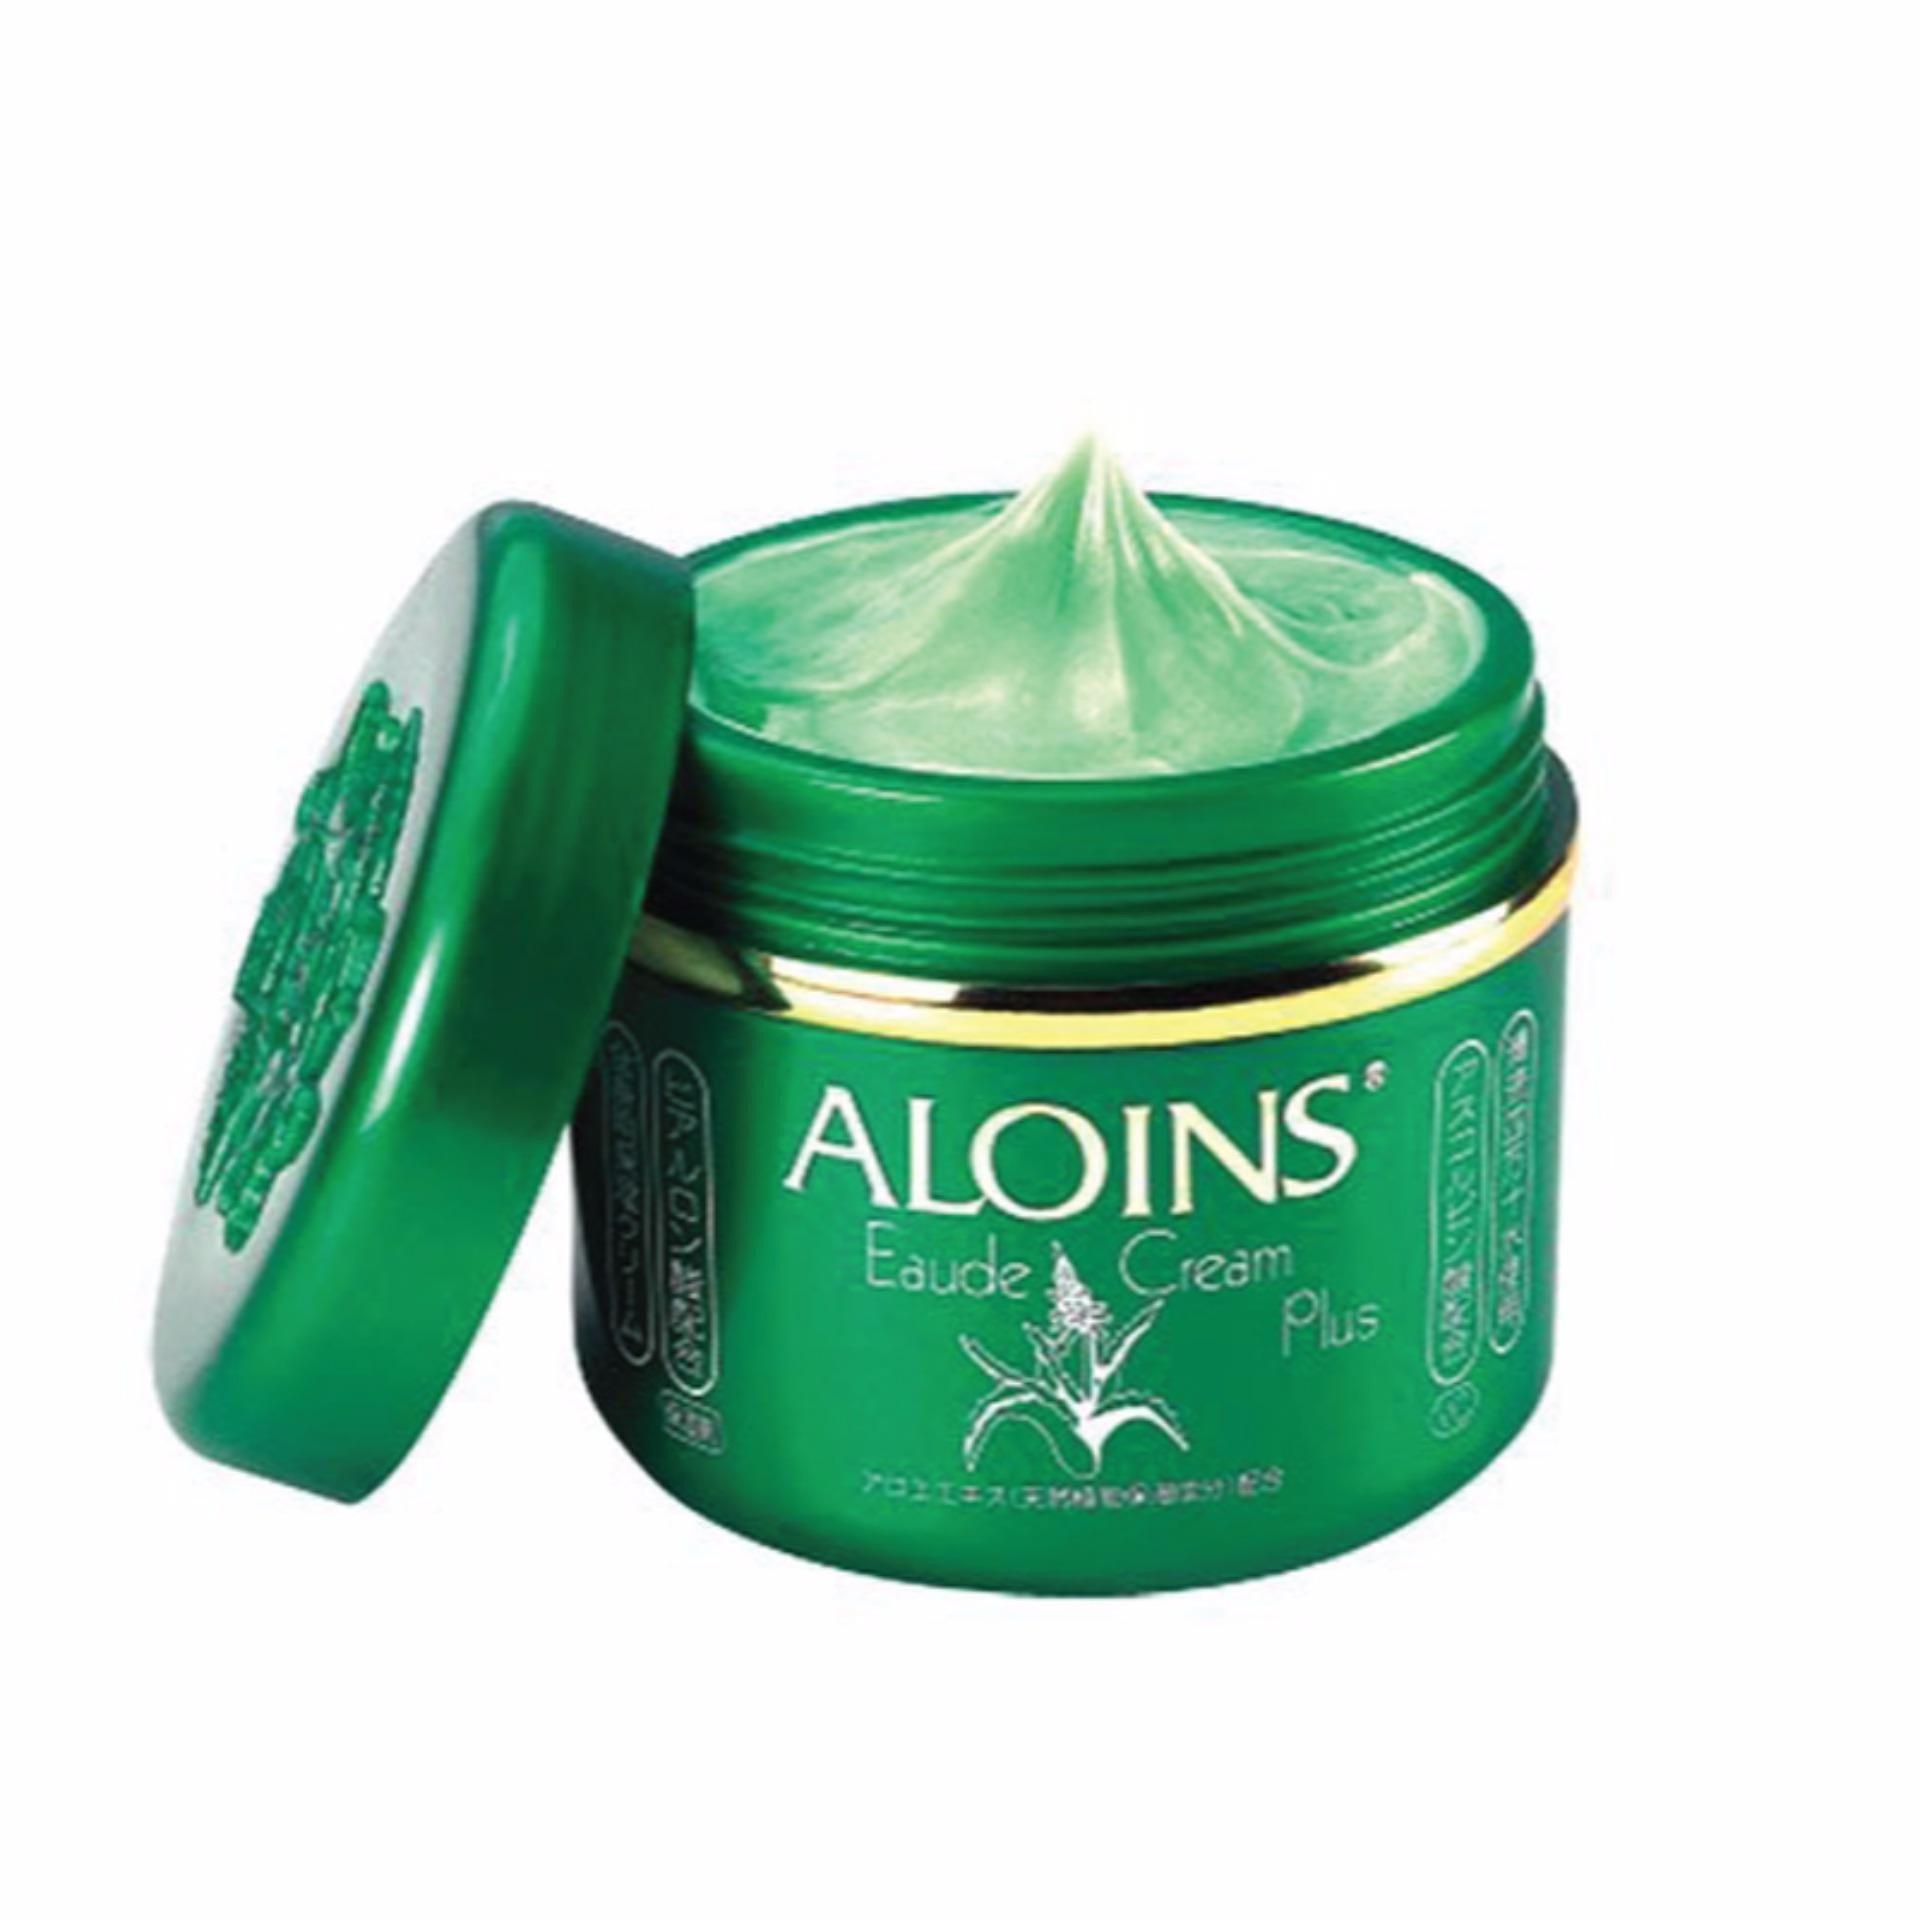 Kem dưỡng ẩm Aloins Eaude Cream S giúp làm da mịn màng hơn bao giờ hết (Nguồn: Internet)